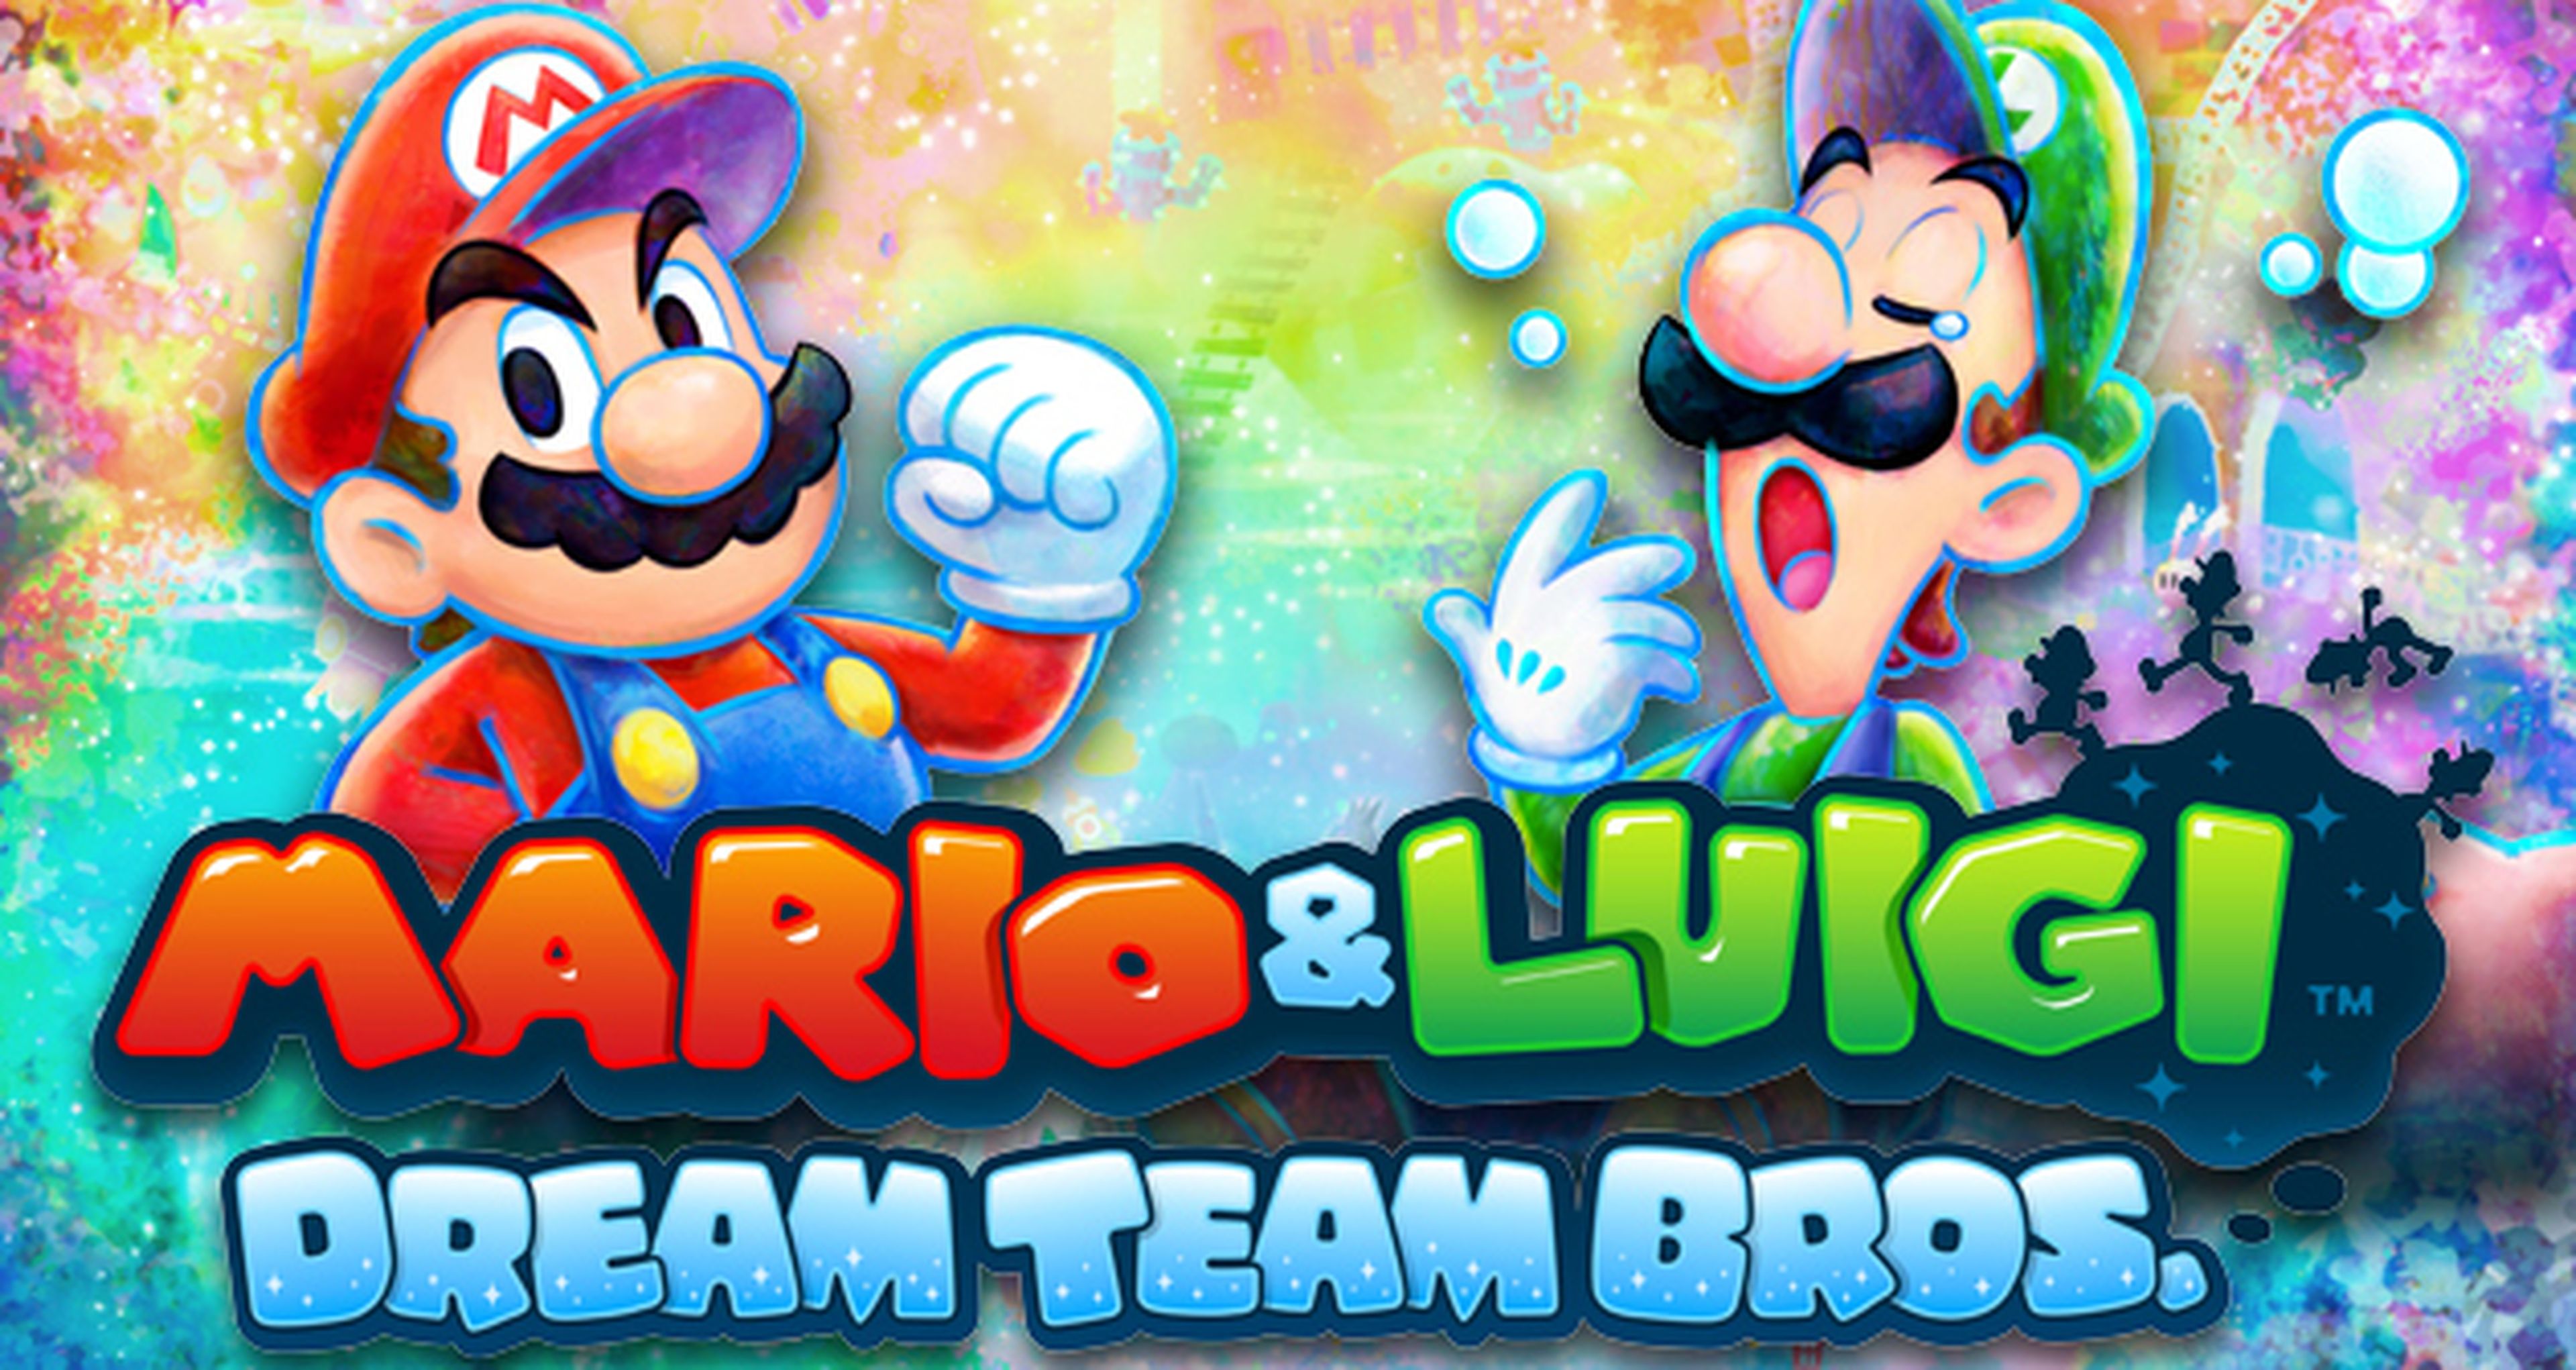 Análisis de Mario &amp; Luigi: Dream Team Bros.